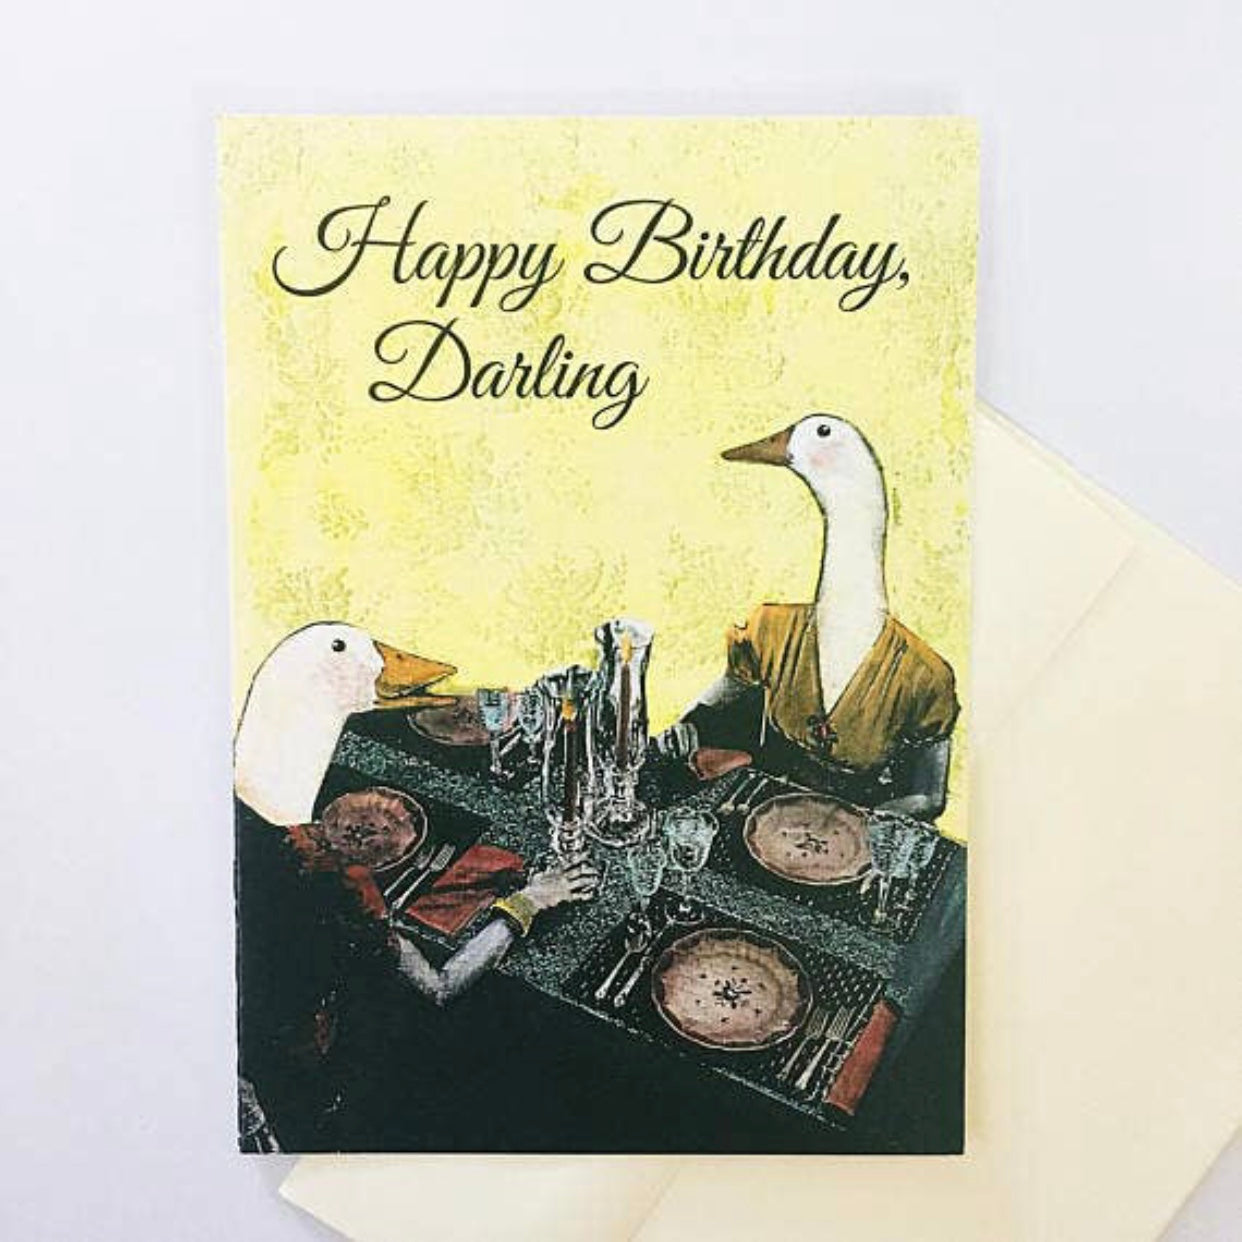 happy birthday darling greeting card